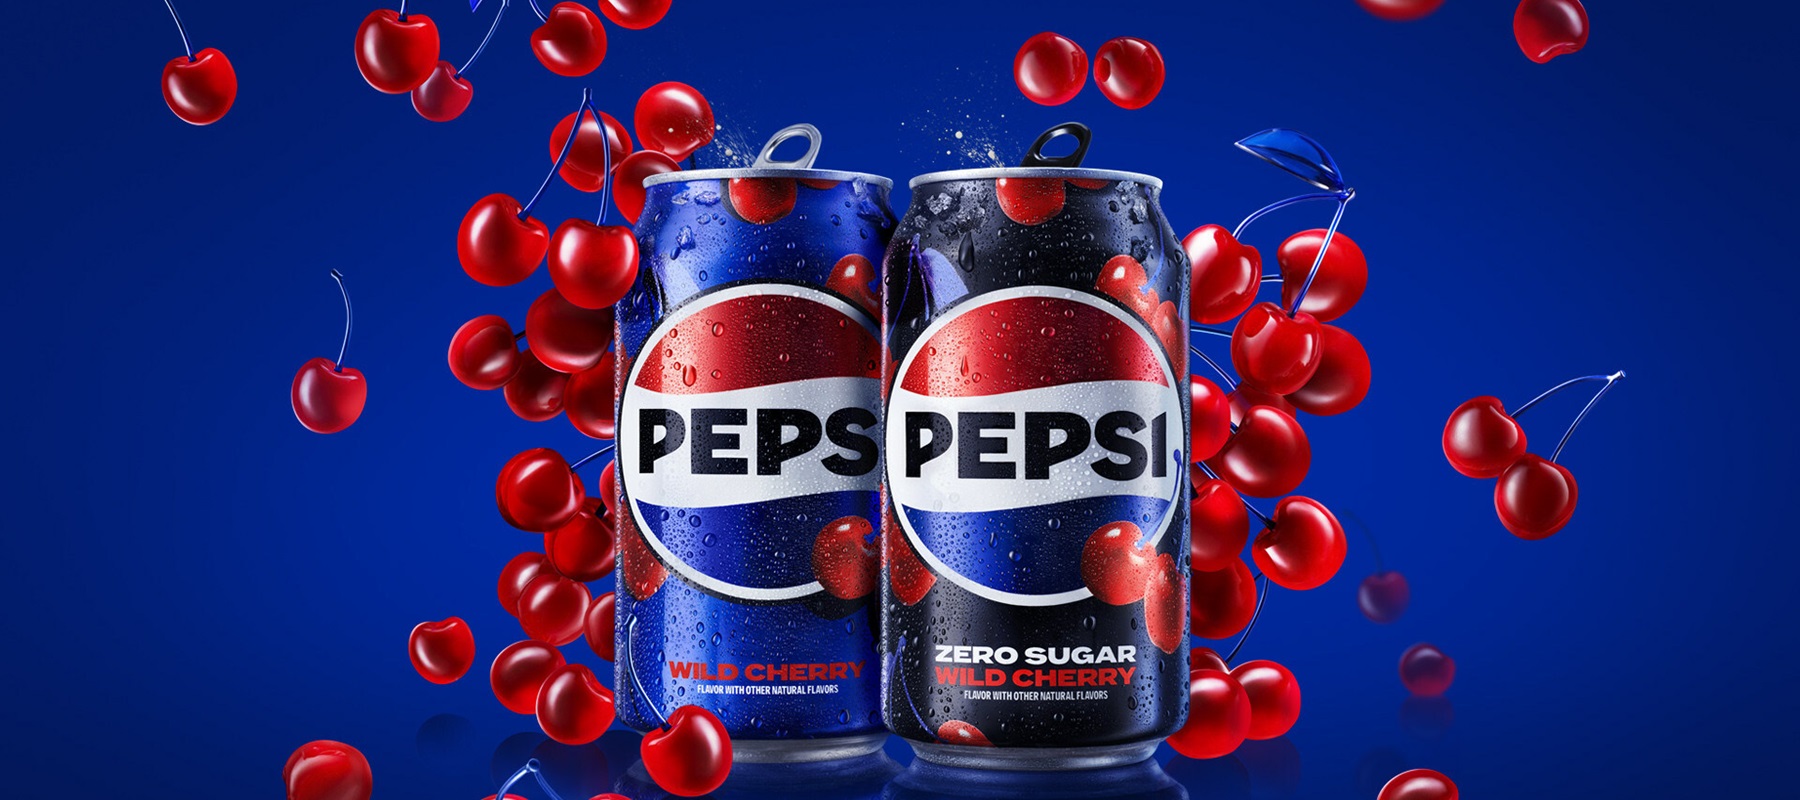 Pepsi Wild Cherry ad campaign targets millennials